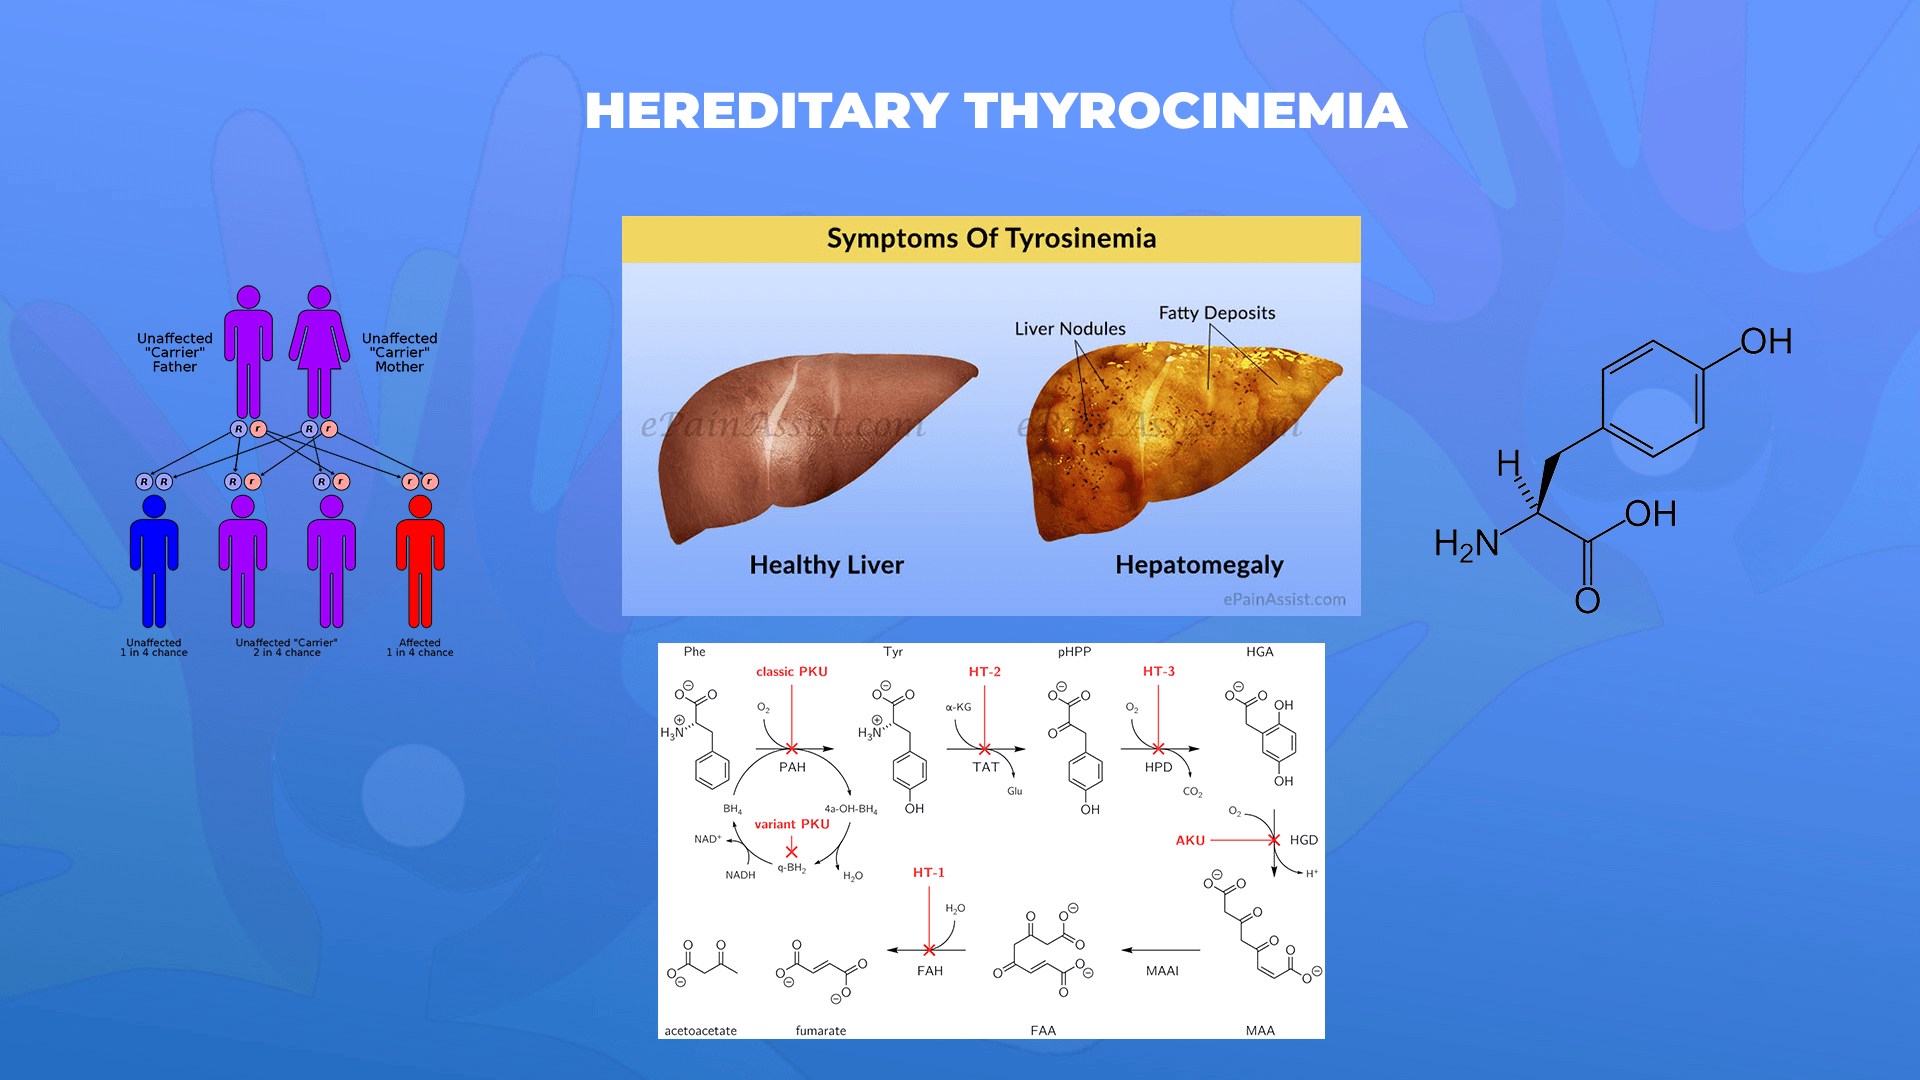 Ги запознаваме ретките болести: Наследна Тироцинемија – Hereditary Thyrocinemia